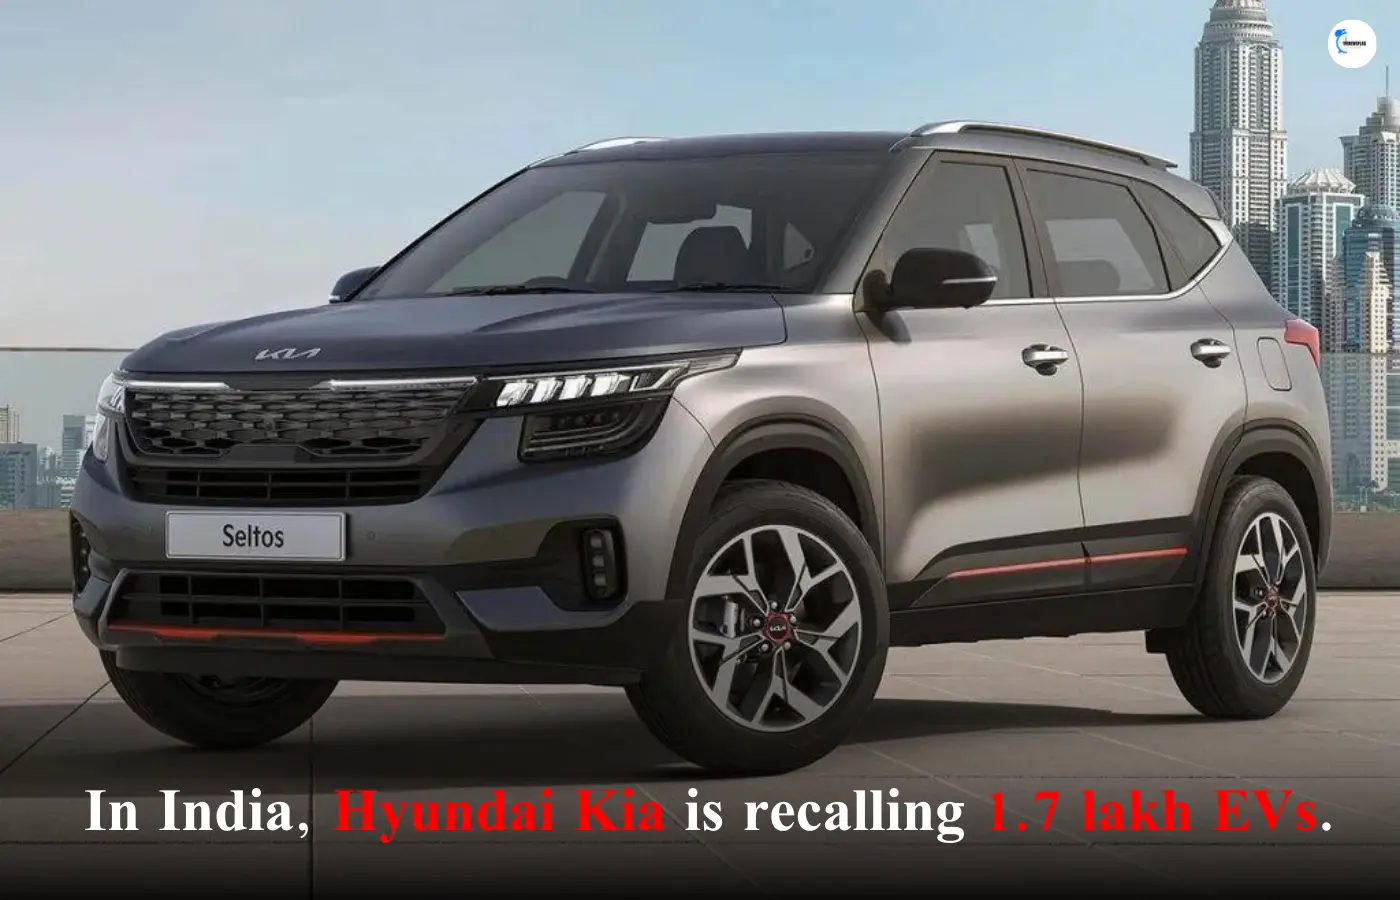 In India, Hyundai Kia is recalling 1.7 lakh EVs.